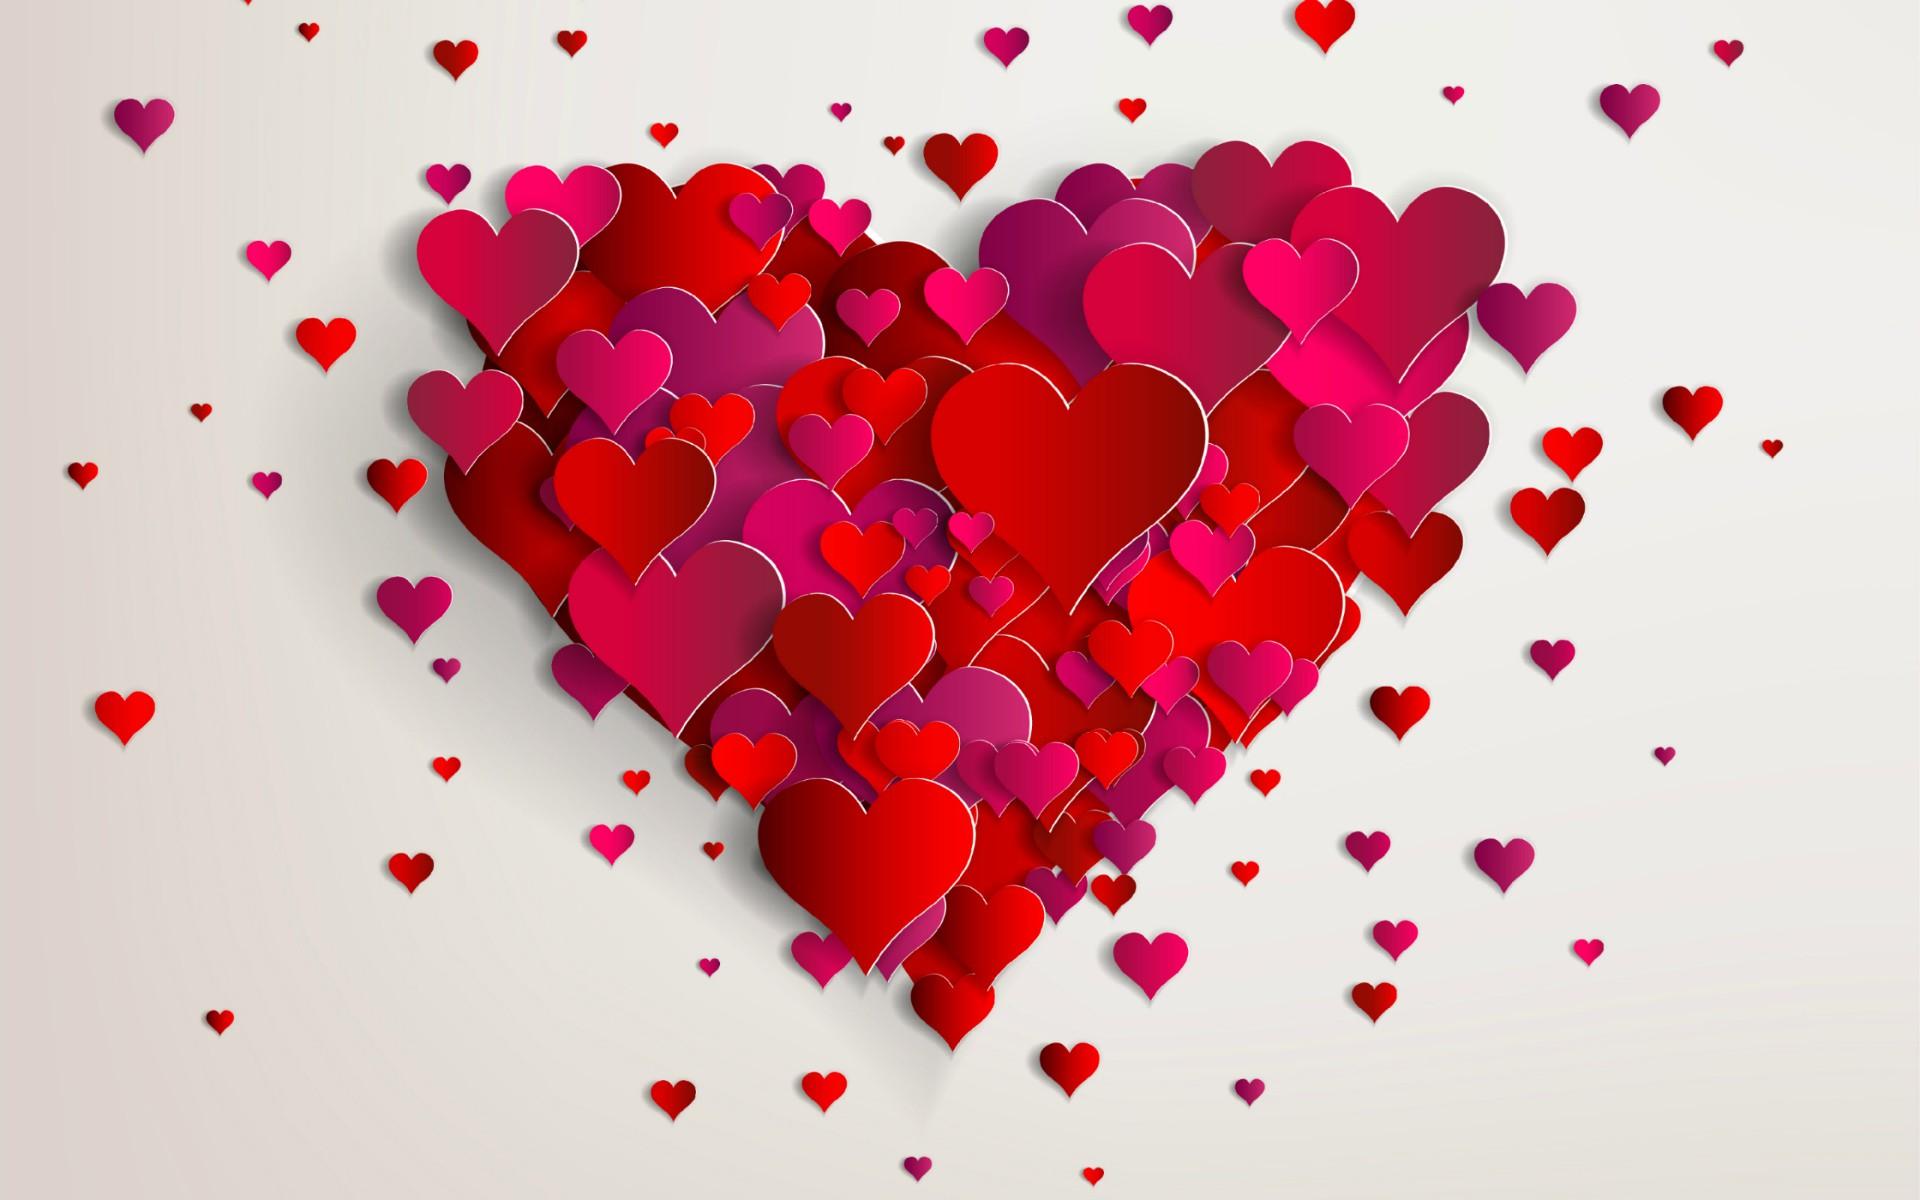 Free download Heart of Hearts Desktop Wallpaper New HD